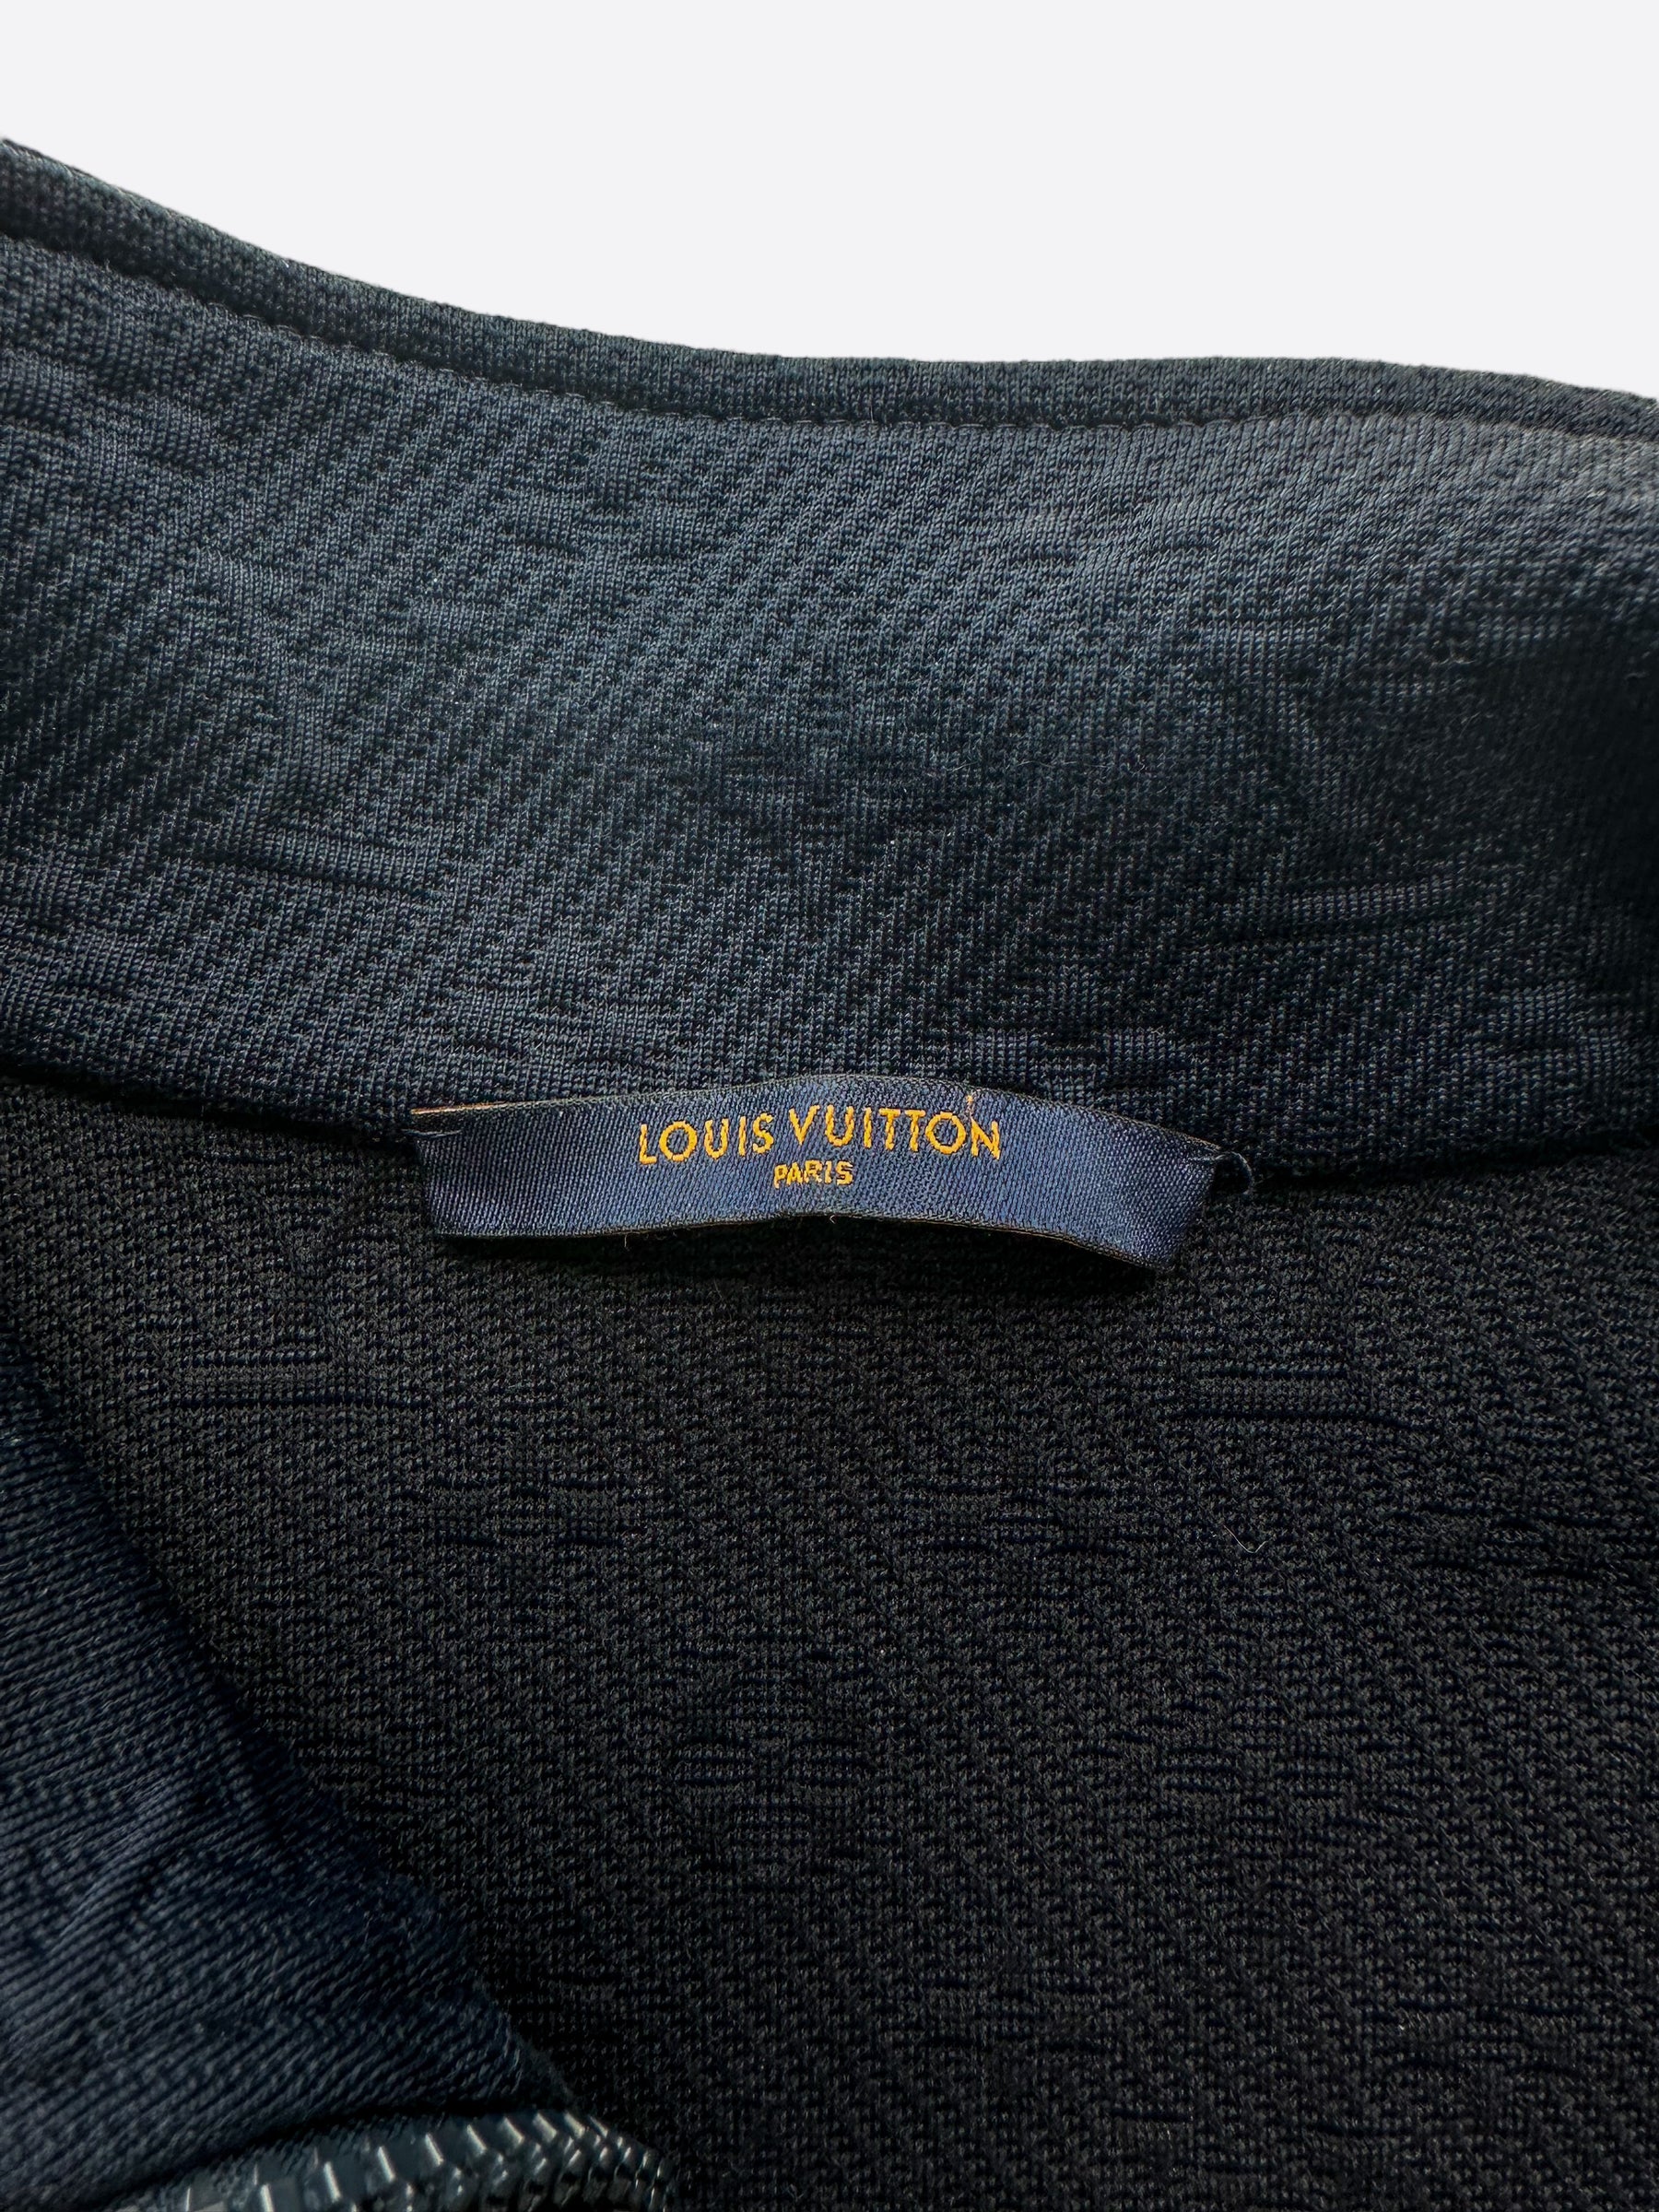 Louis Vuitton Mens Track Jackets, Navy, L